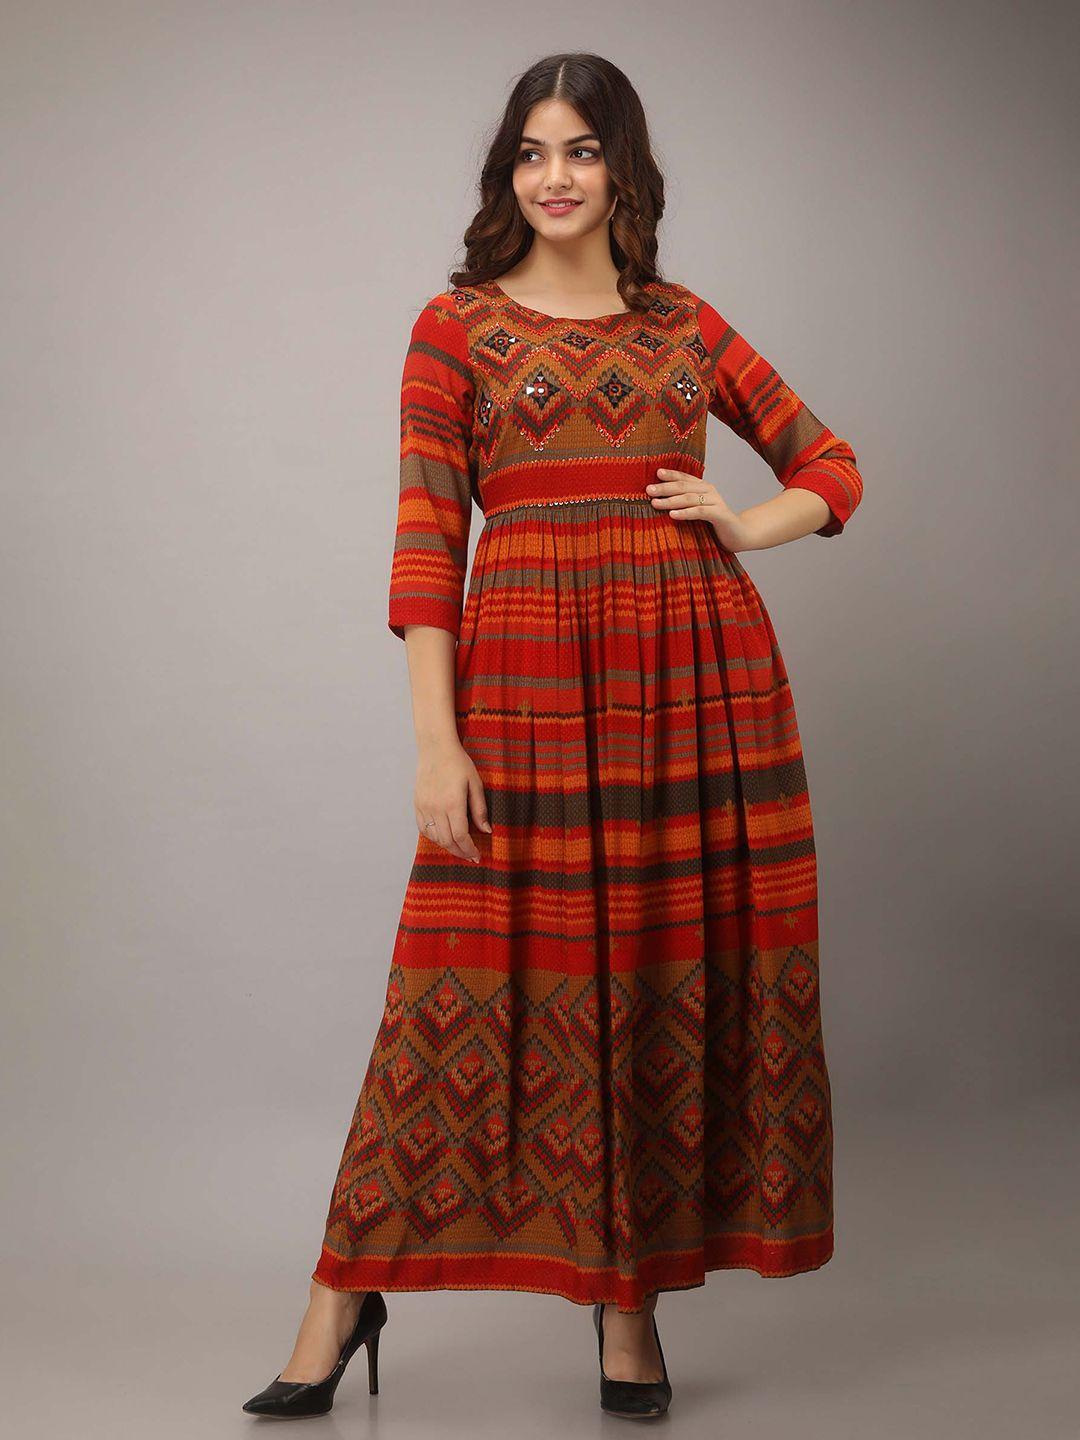 spera ethnic motifs printed flared ethnic dress